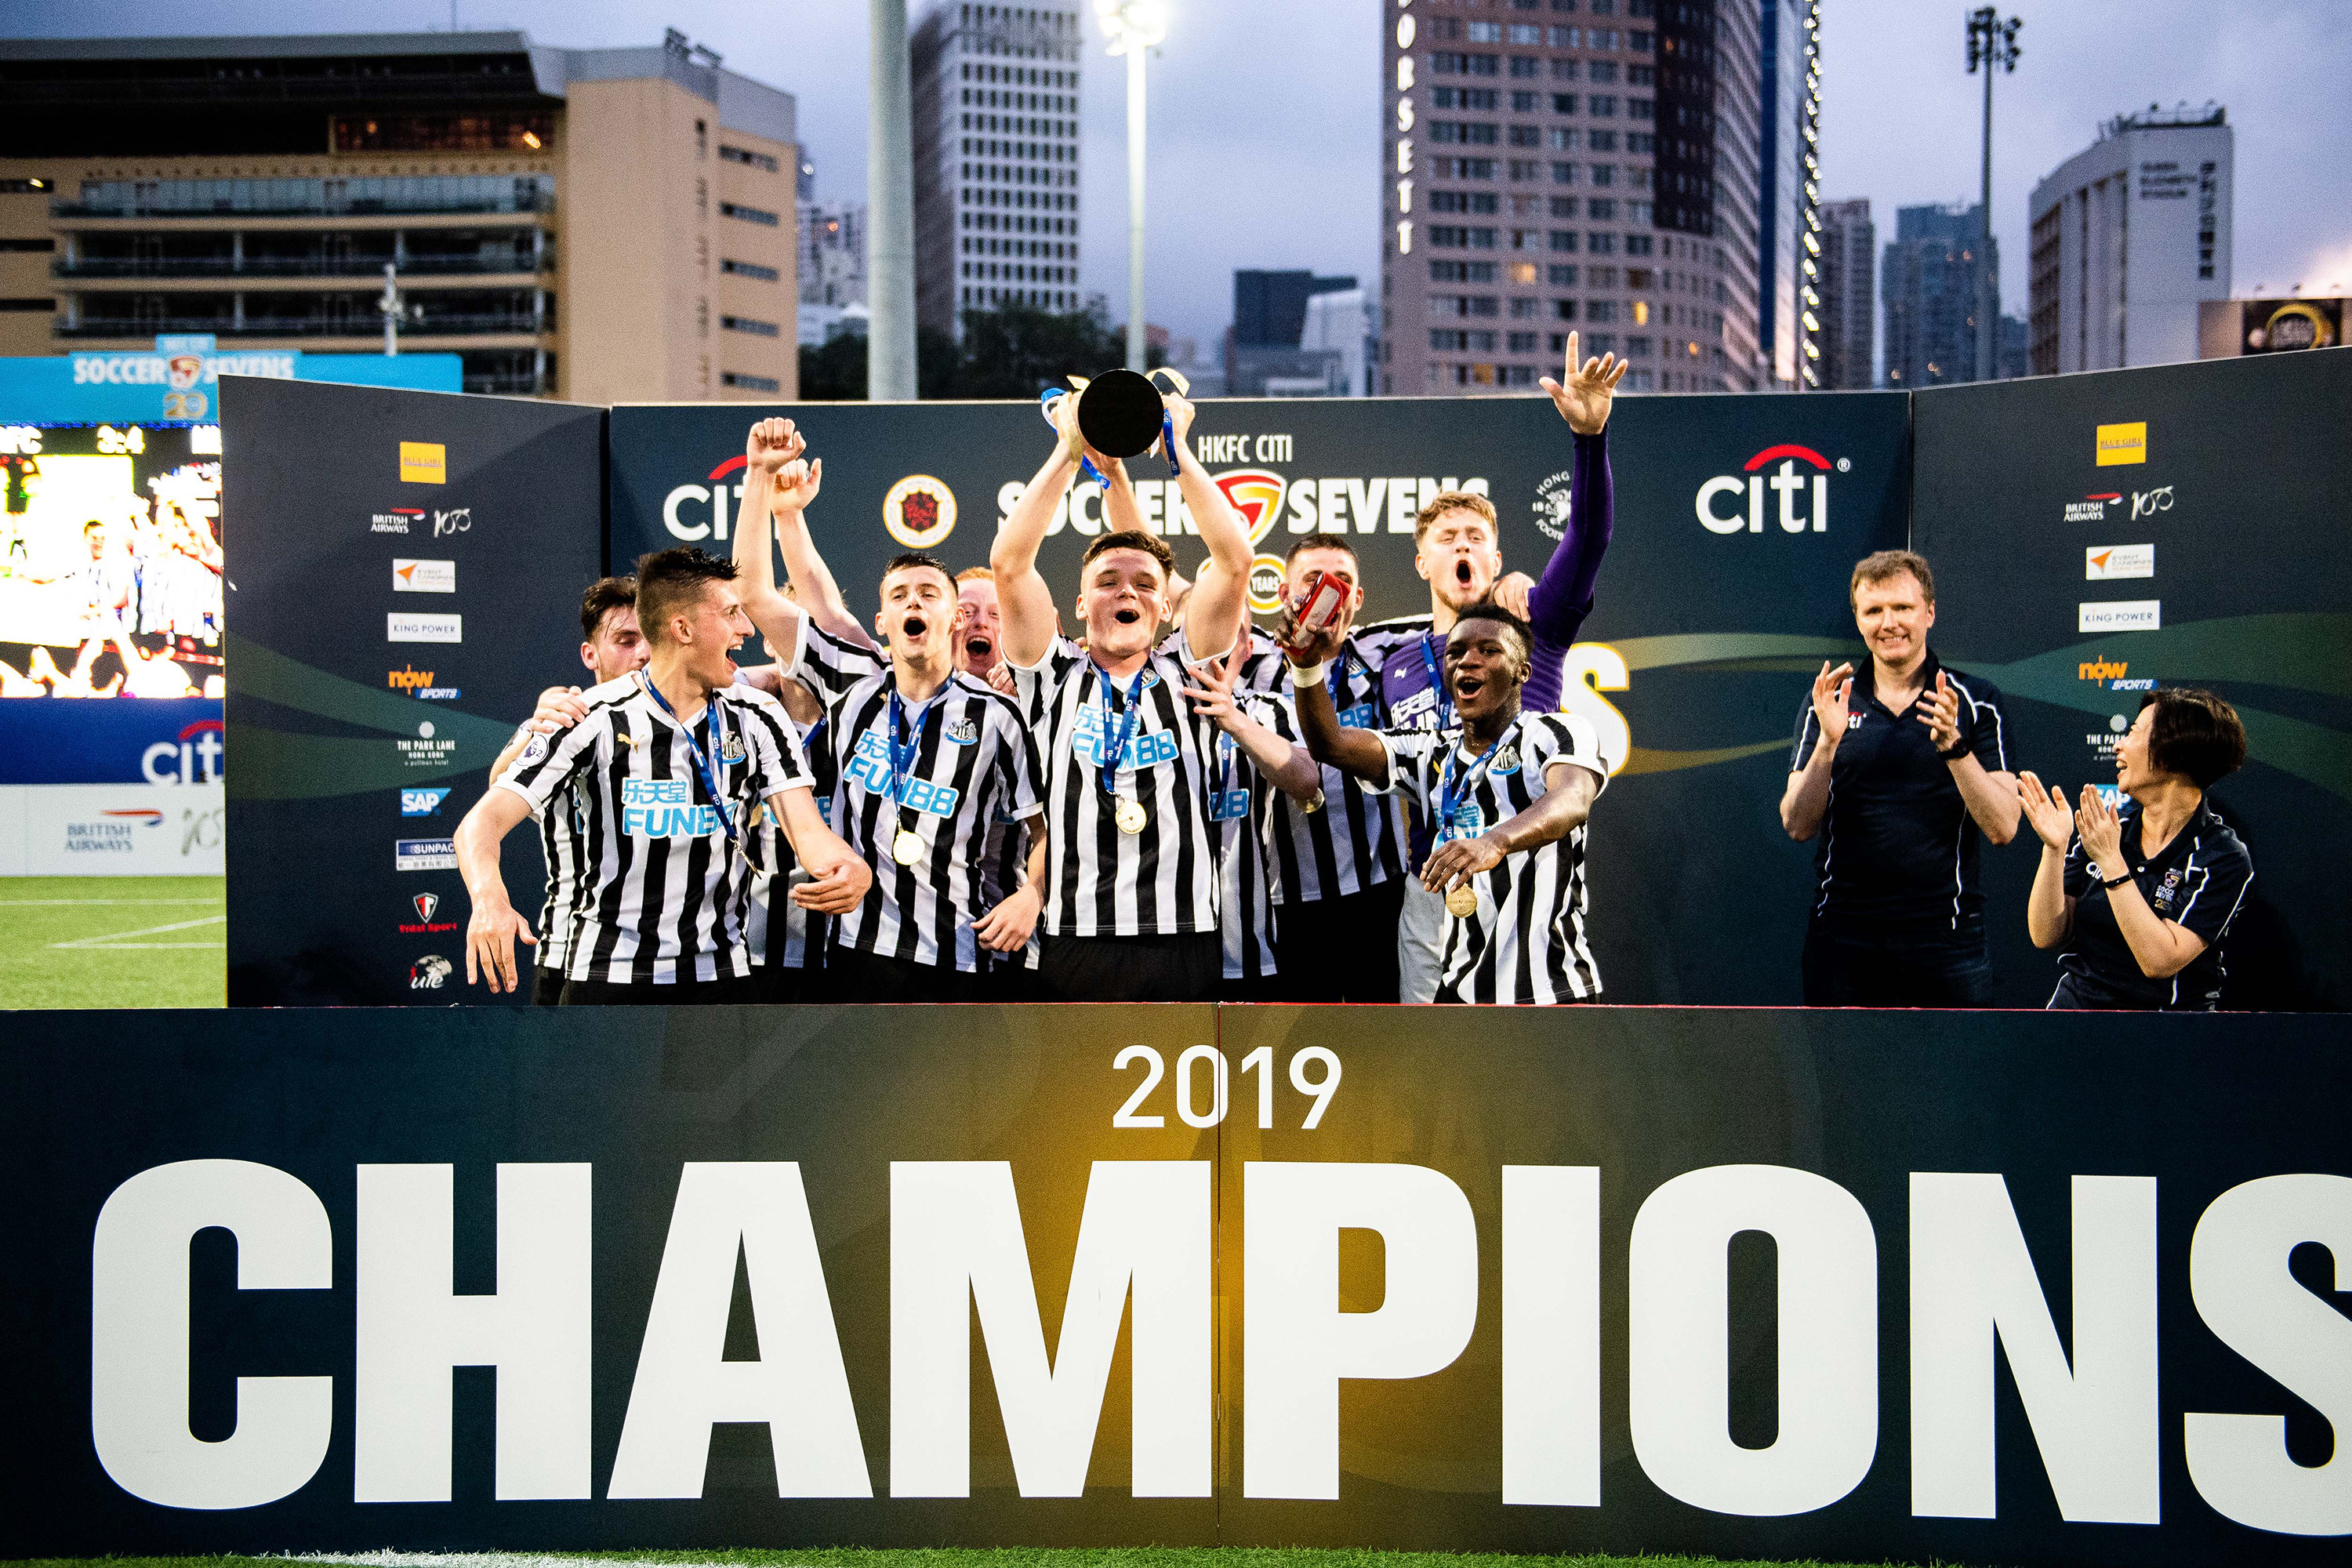 Newcastle United celebrate winning the HKFC Citi Soccer Sevens in 2019. Photo: Handout